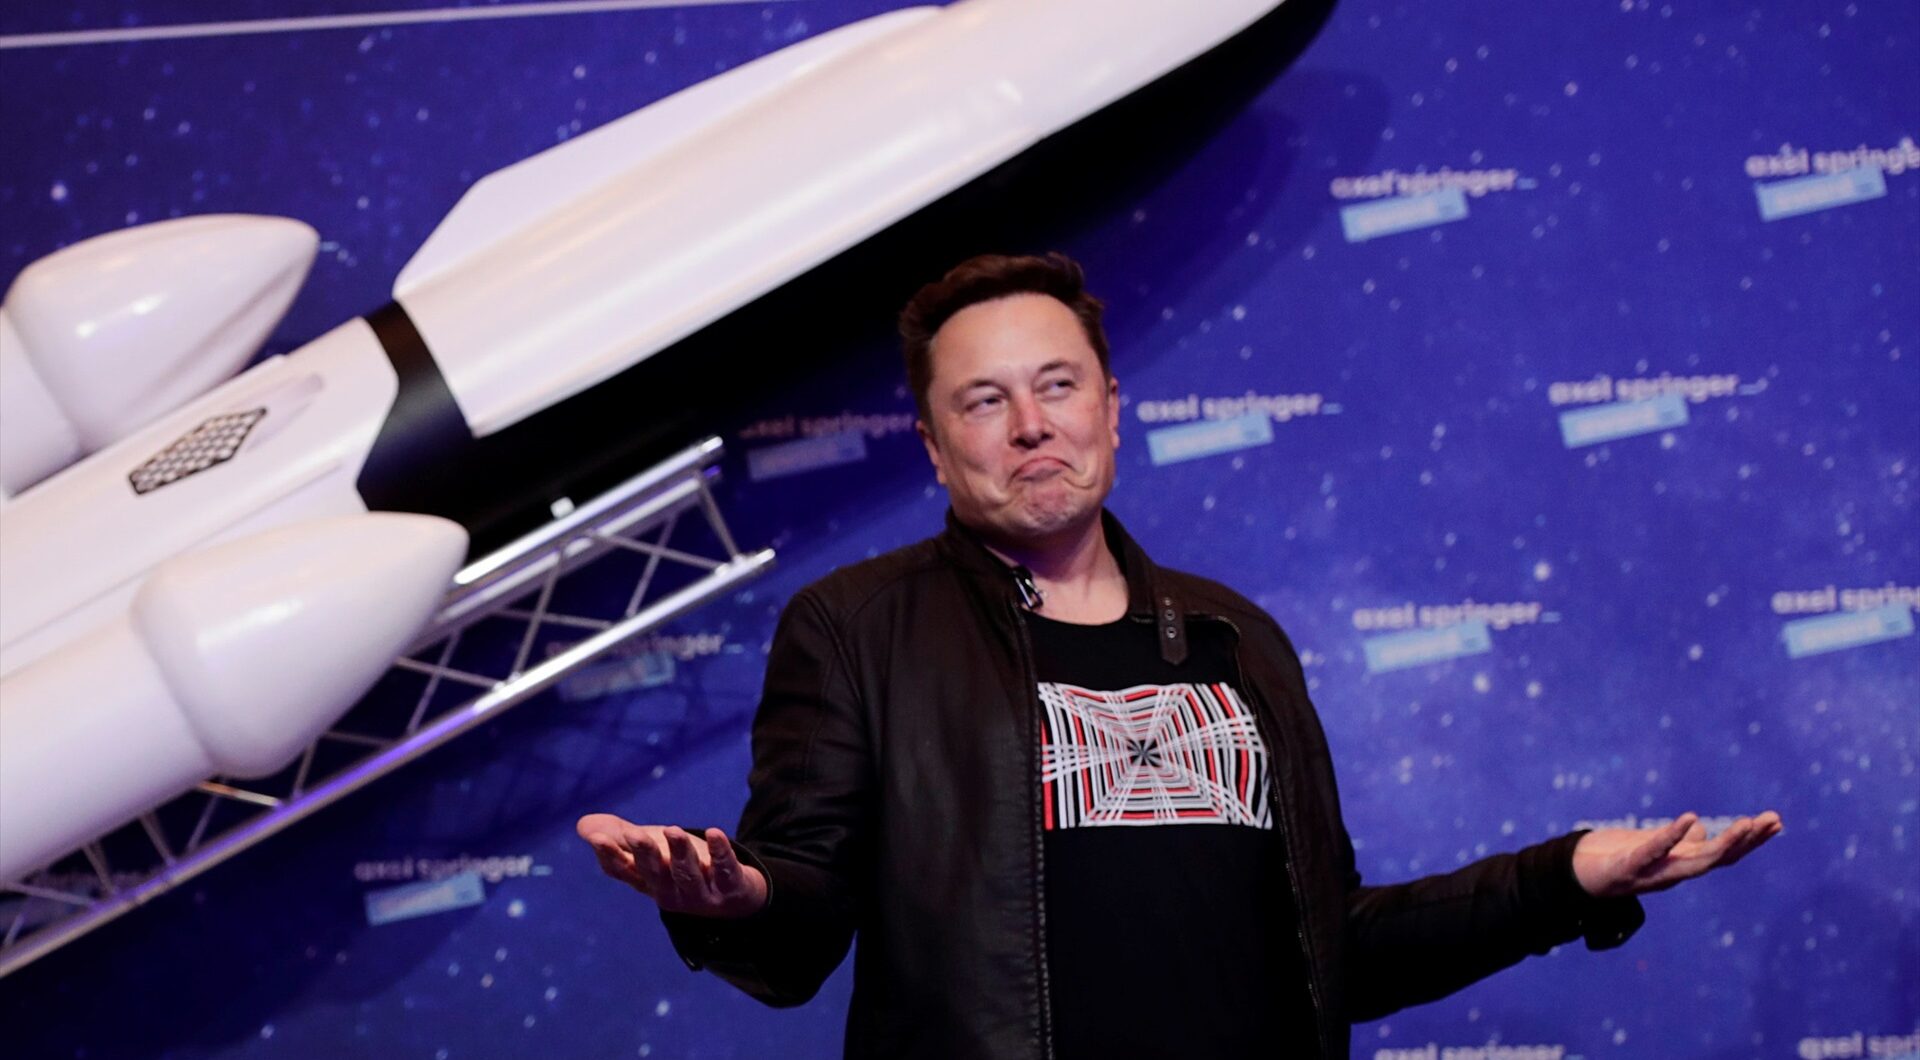 SpaceX CEO Elon Musk